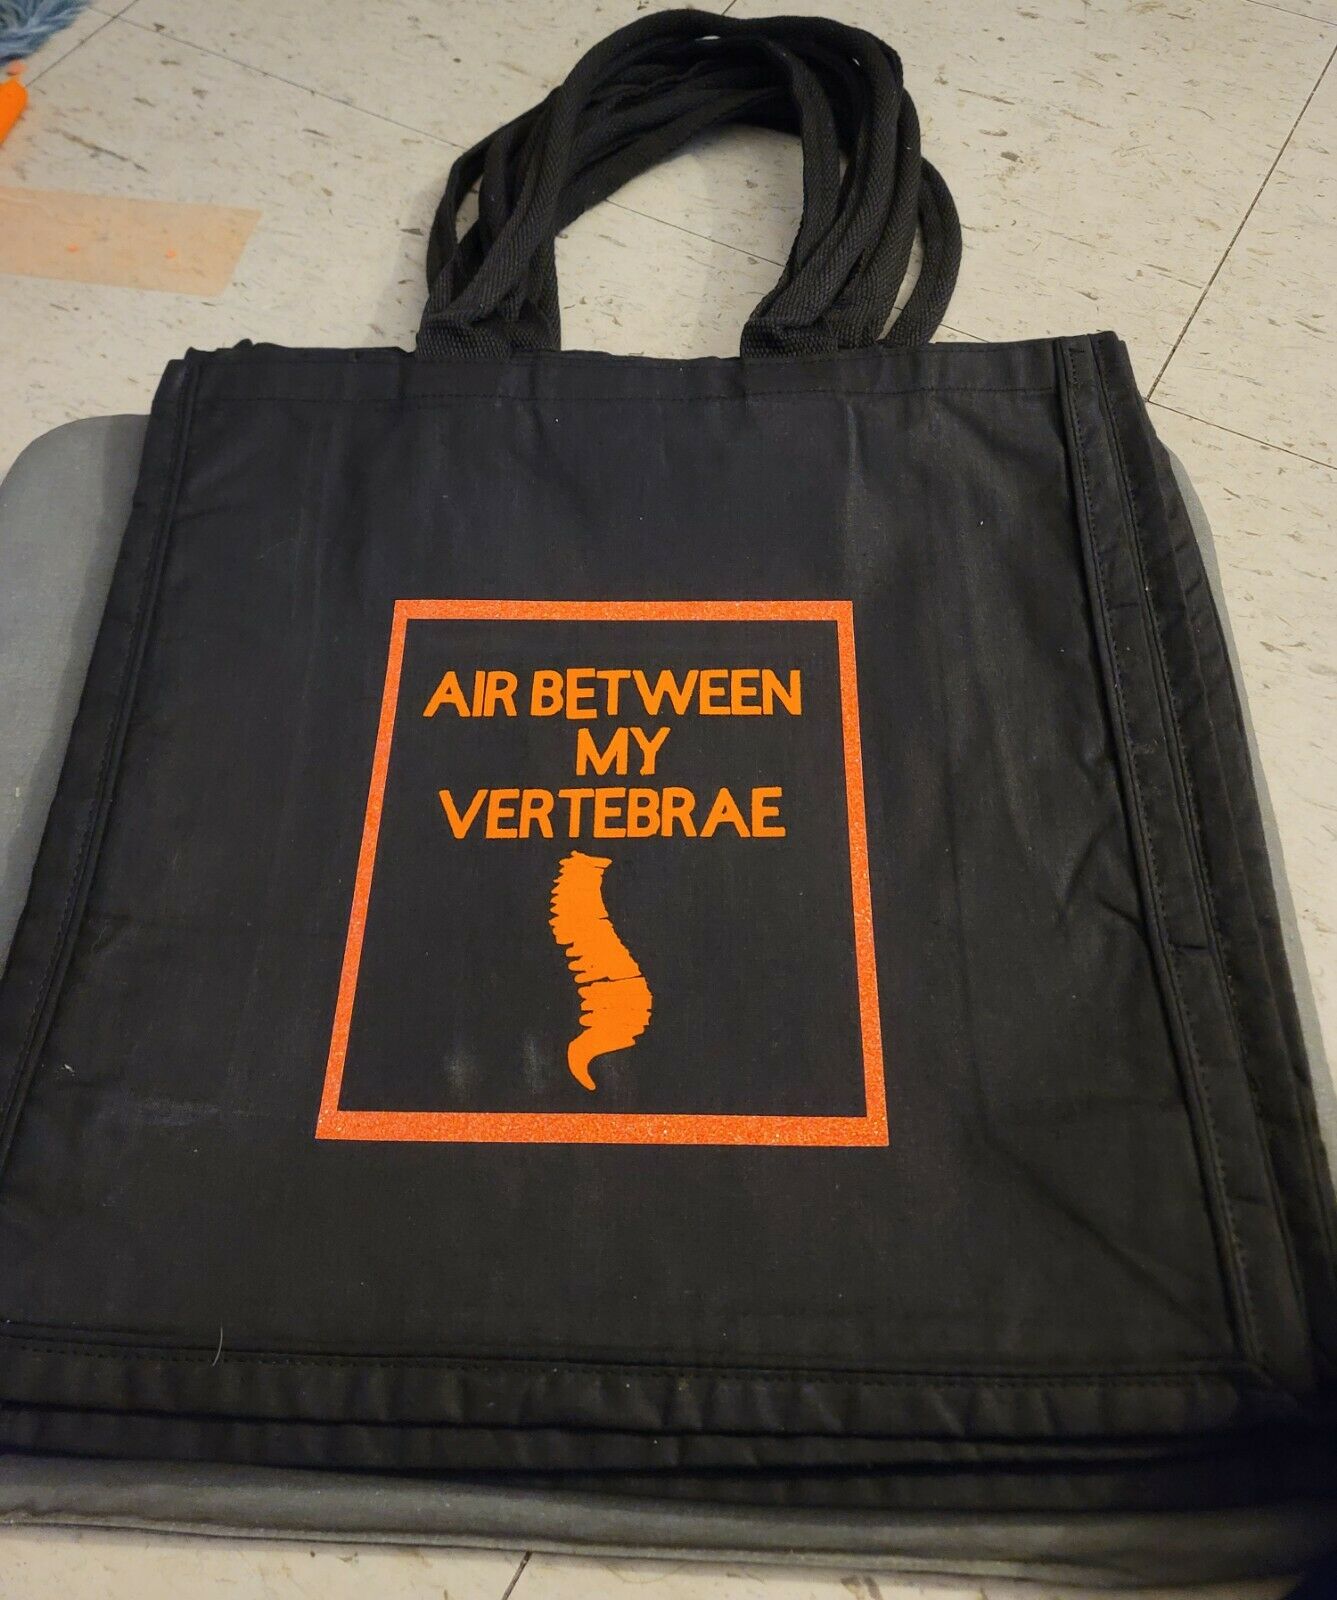 A photo of the AIR BETWEEN MY VERTEBRAE tote bag